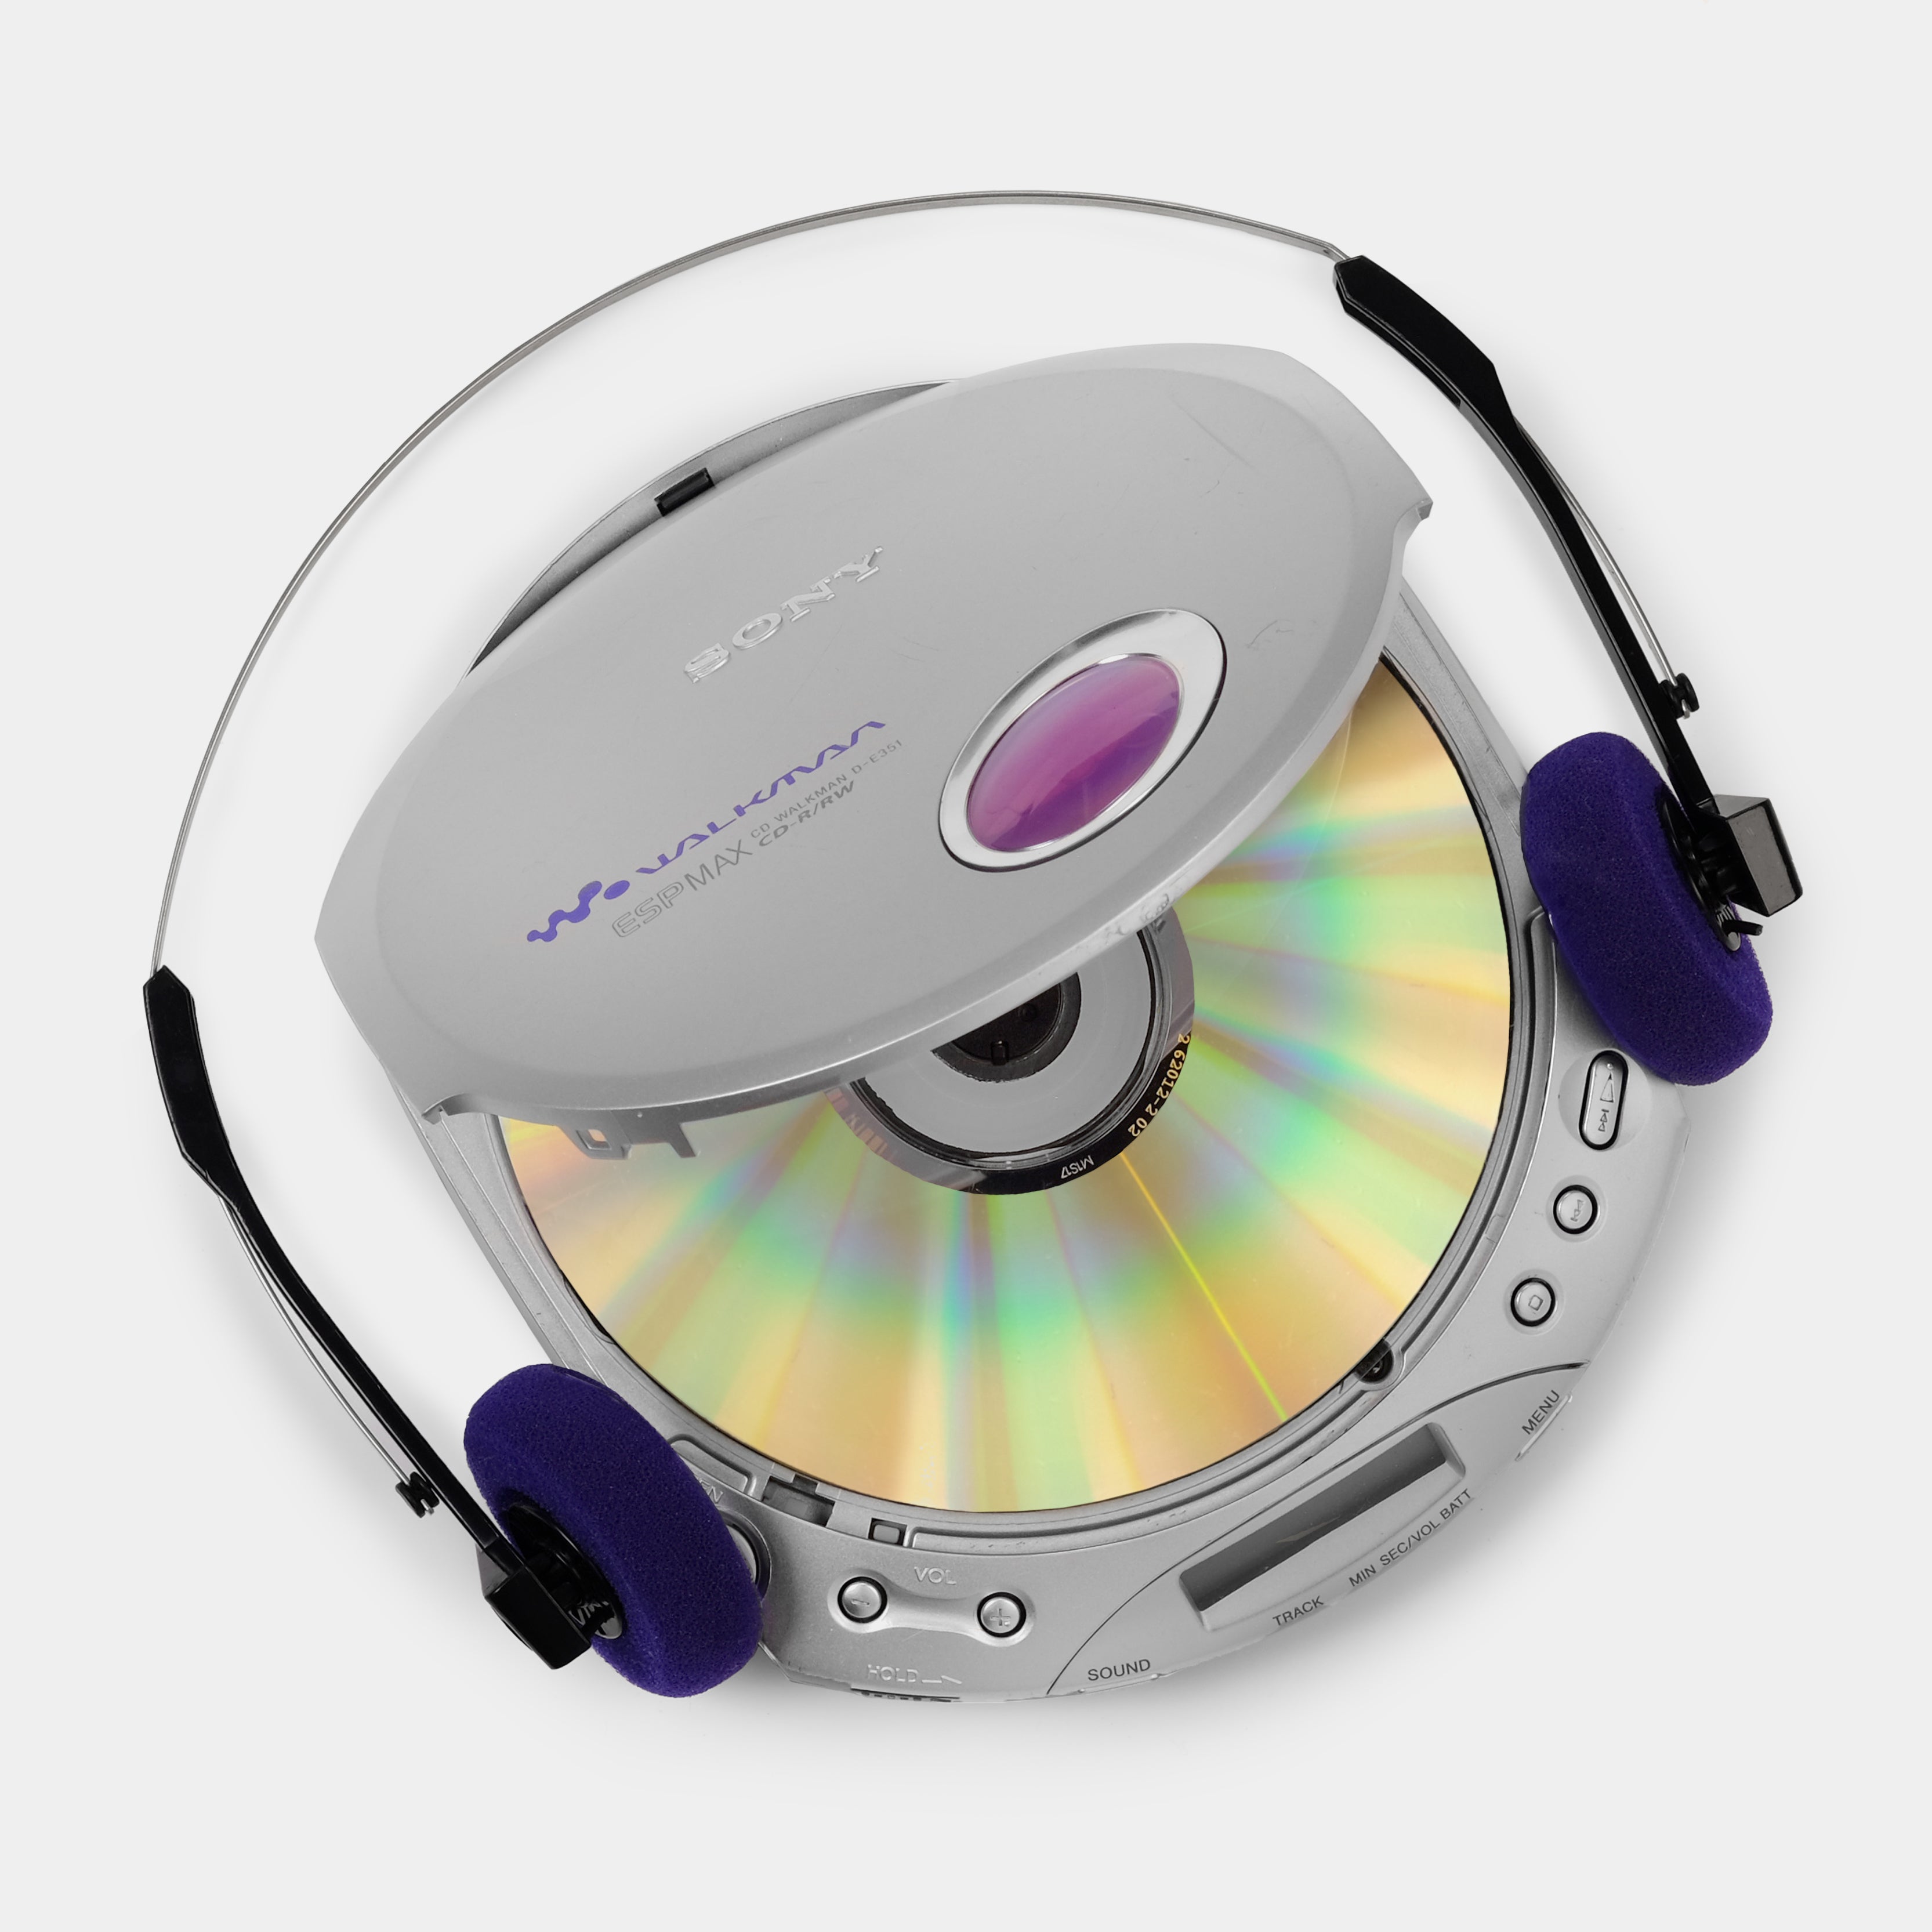 Sony Walkman D-E351 Portable CD Player